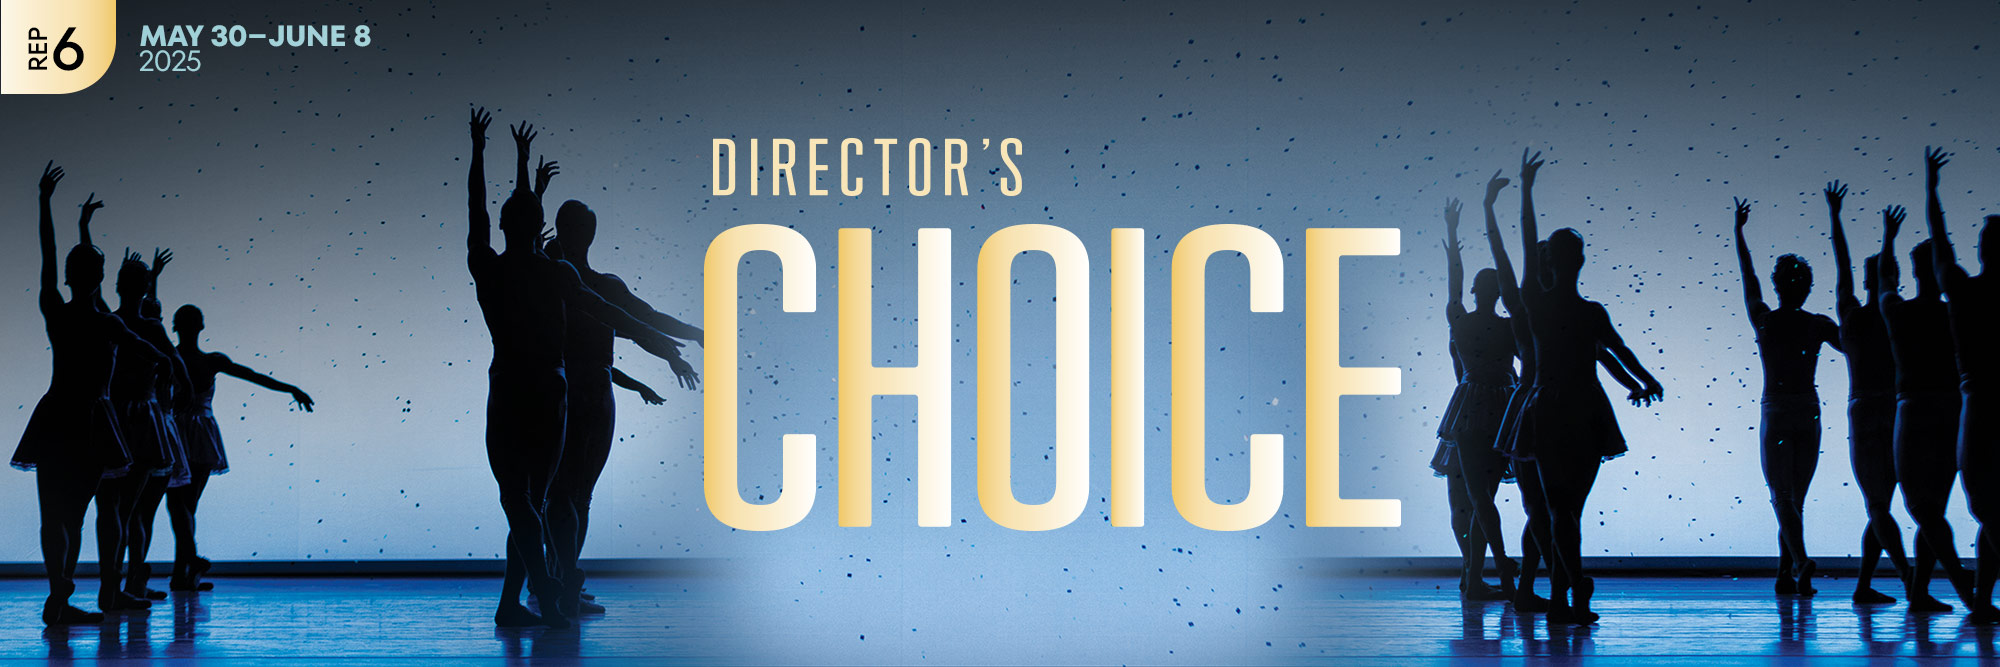 Rep 6: Director's Choice: May 30 - June 8, 2025